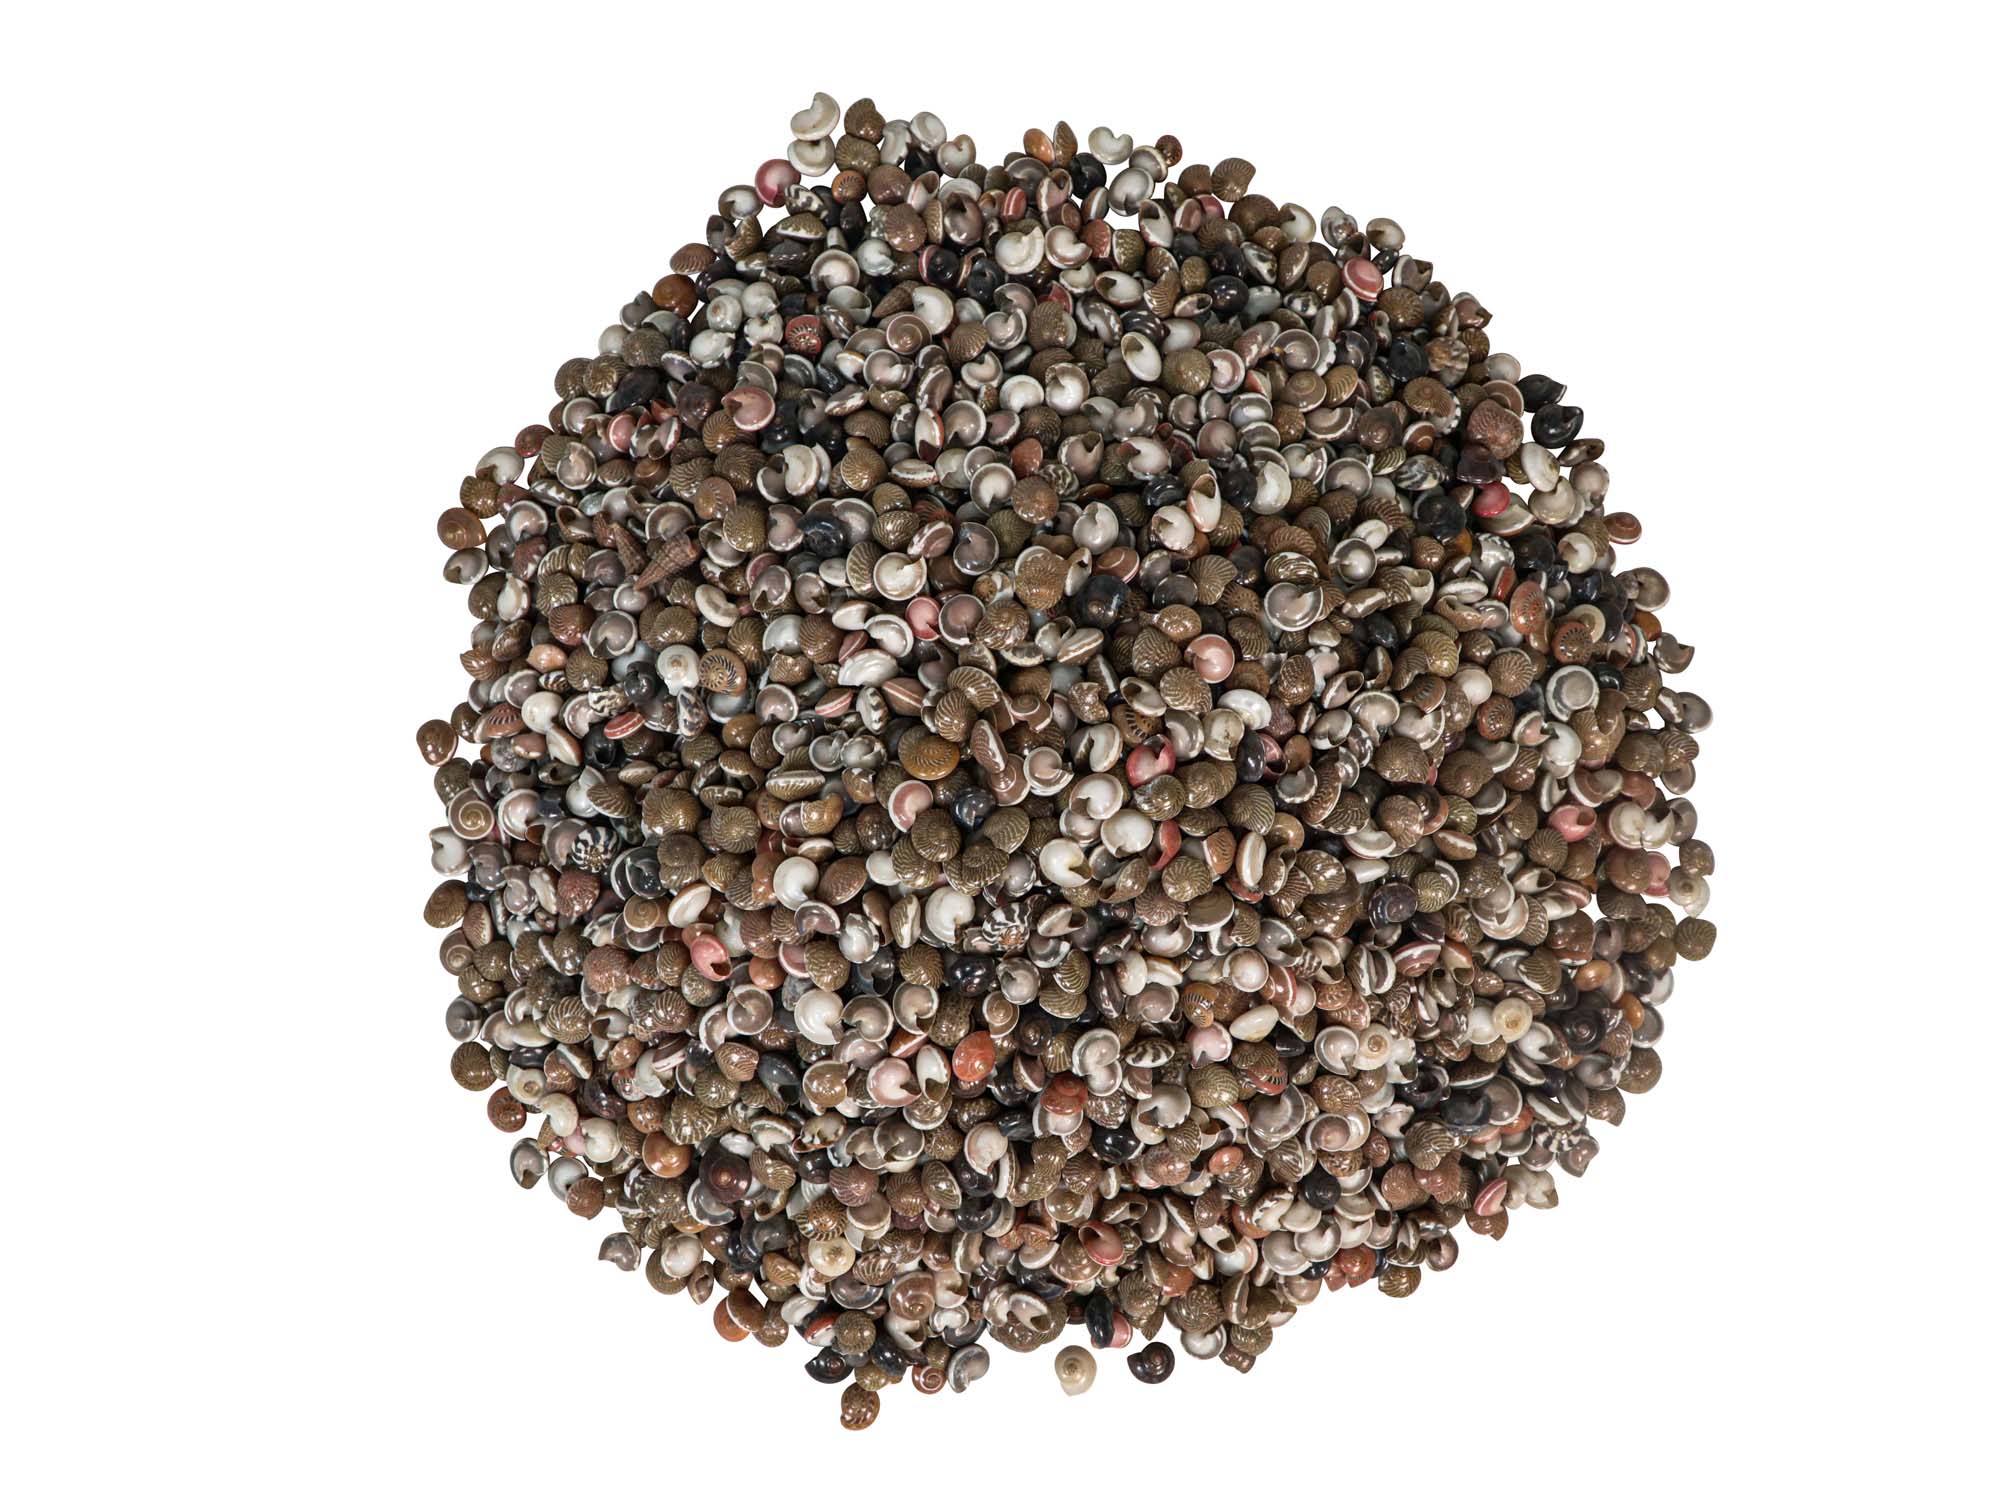  Umbonium Natural Shells 0.25"-0.50" (1 kg or 2.2 lbs) - 2HS-3242K-KG (9UL5)